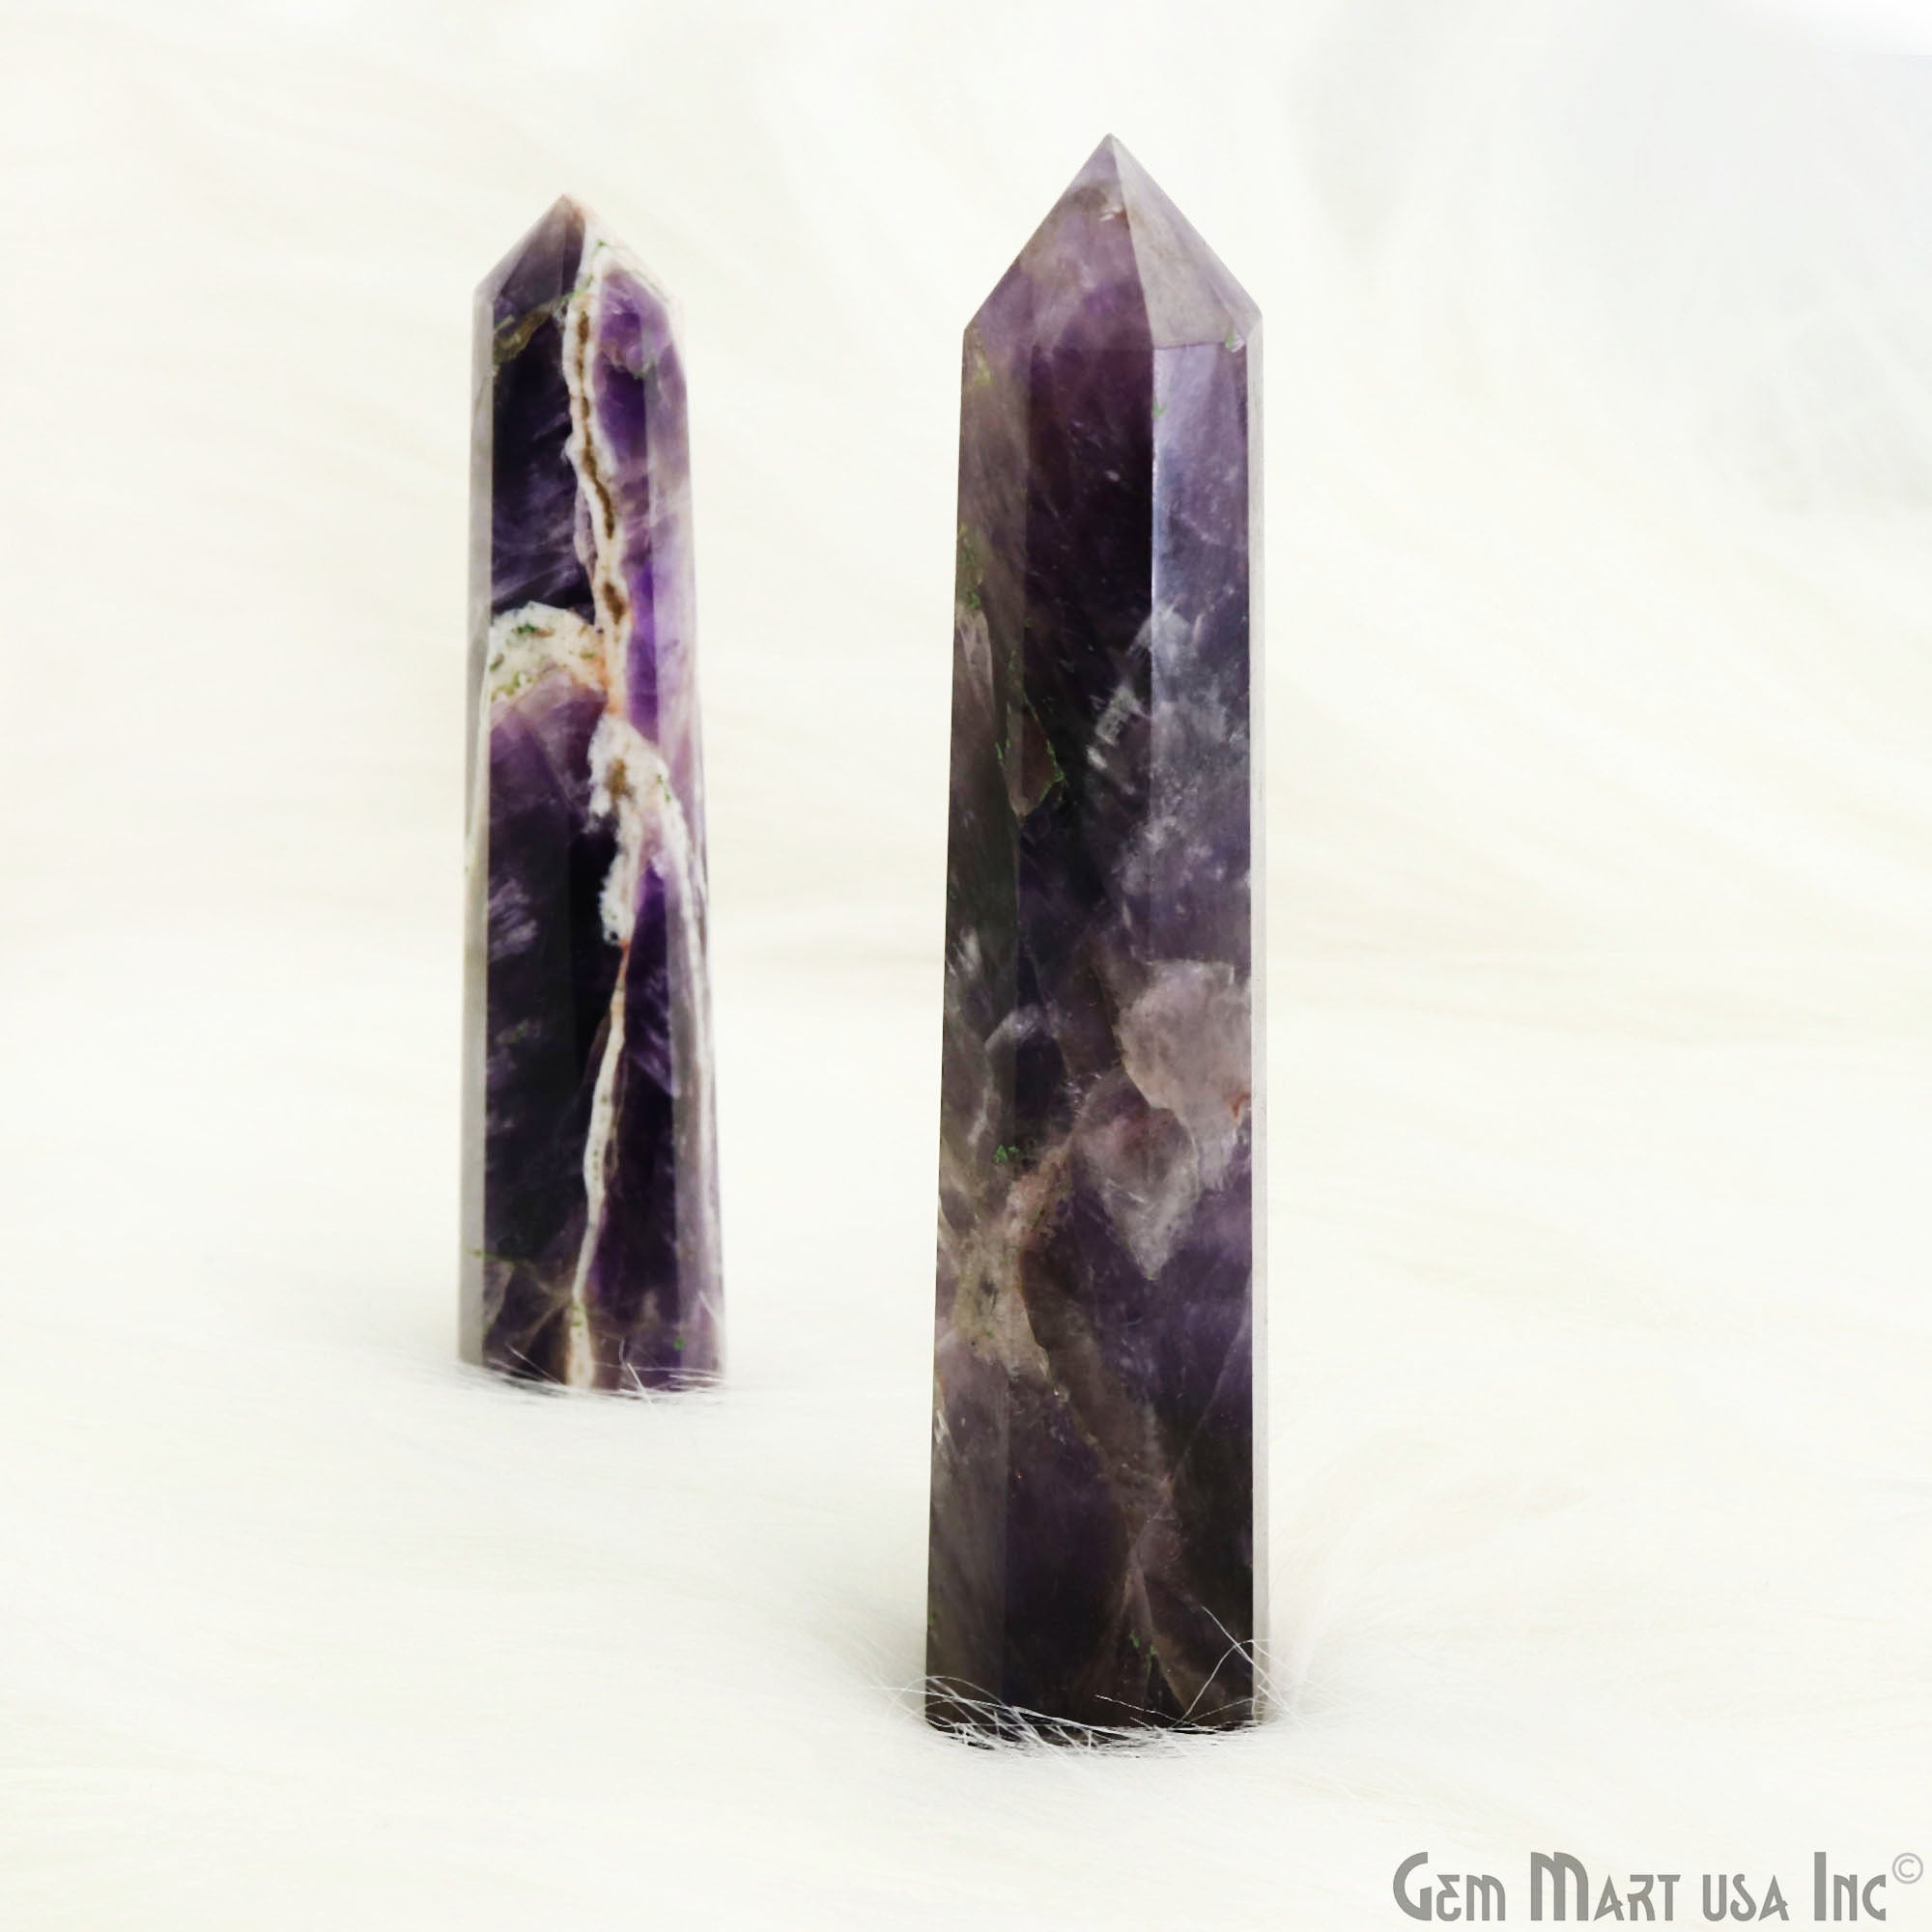 Amethyst Gemstone Jumbo Tower Crystal Tower Obelisk Healing Meditation Gemstones 4-5 Inch